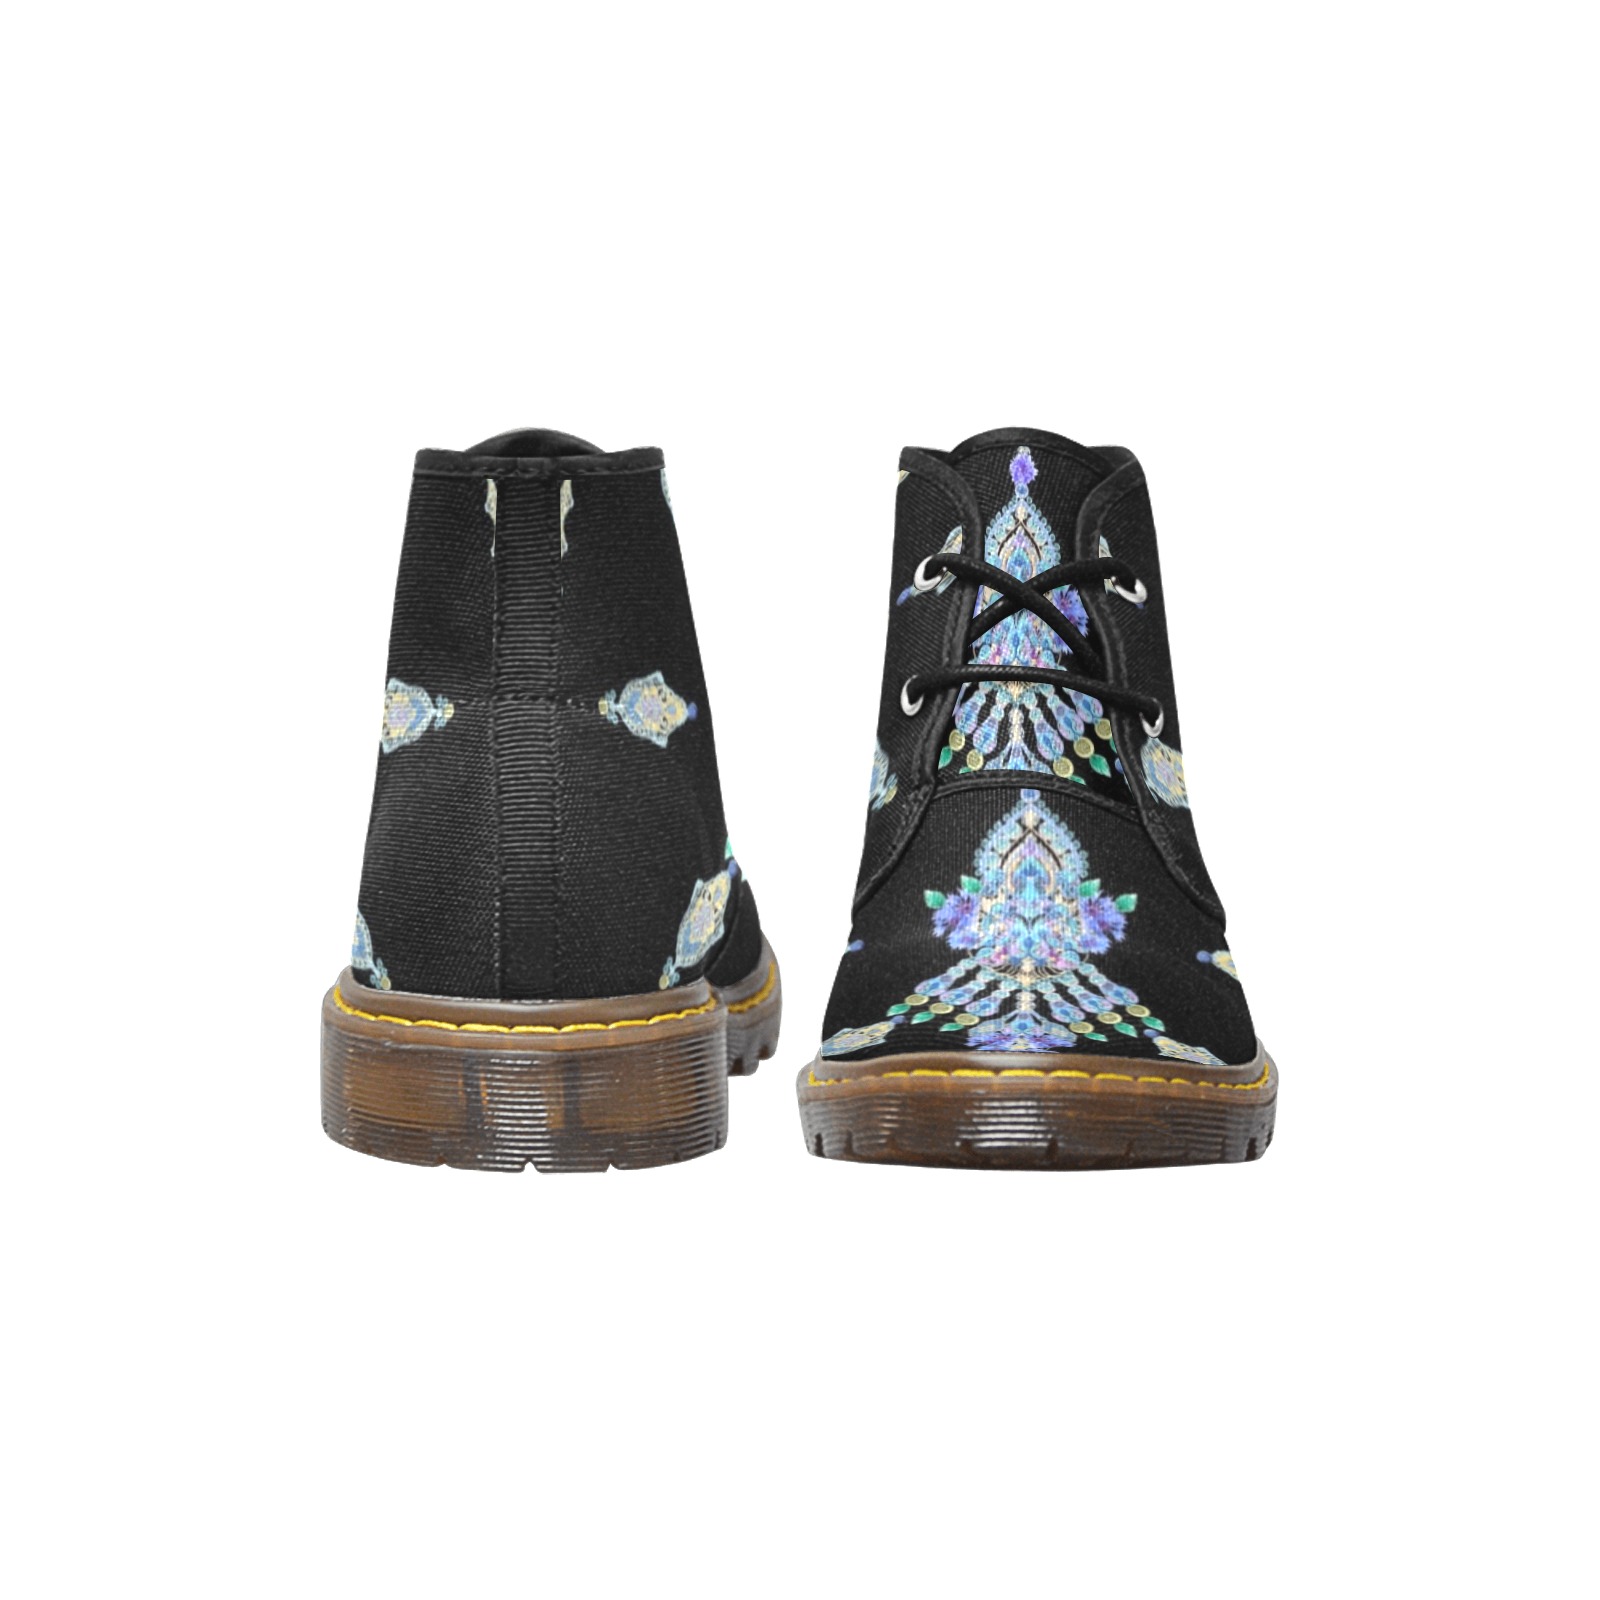 BLEUETS 10 Women's Canvas Chukka Boots (Model 2402-1)